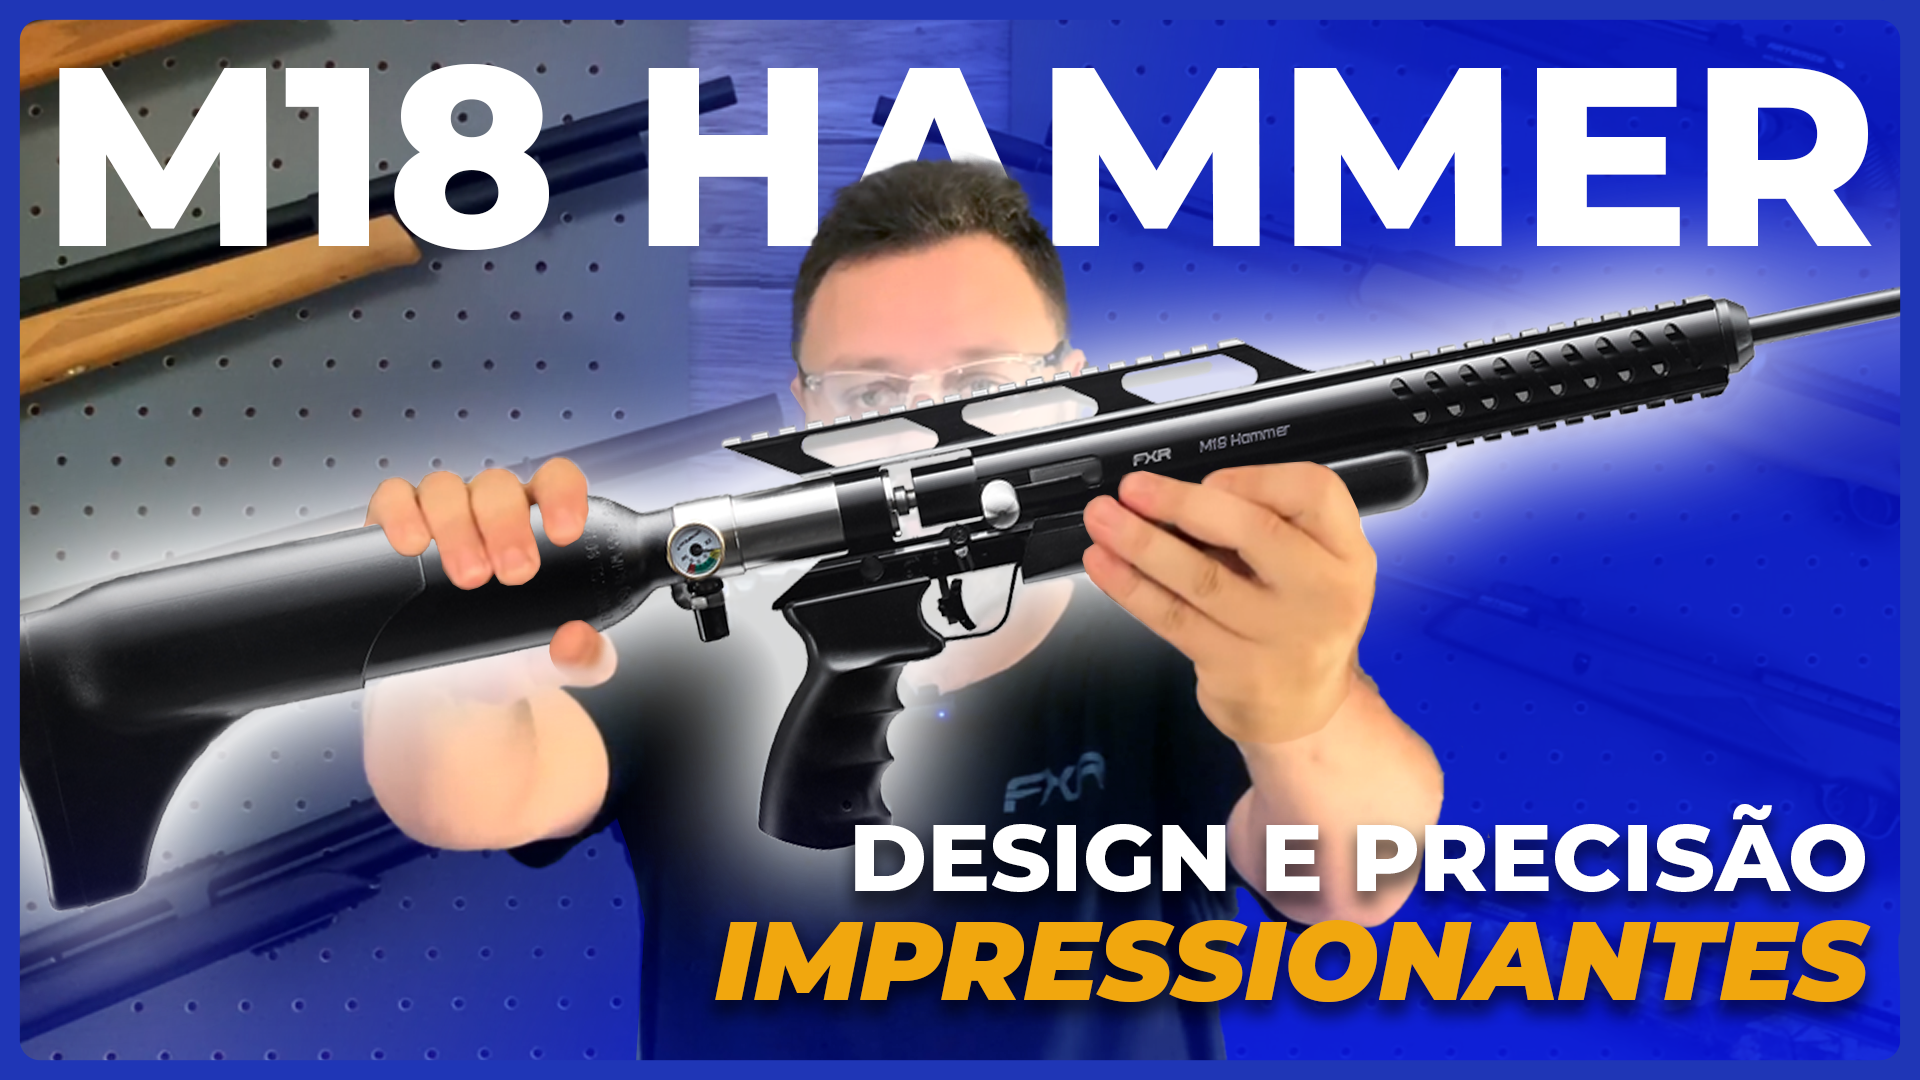 Review + Teste Carabina PCP Artemis M18 Hammer